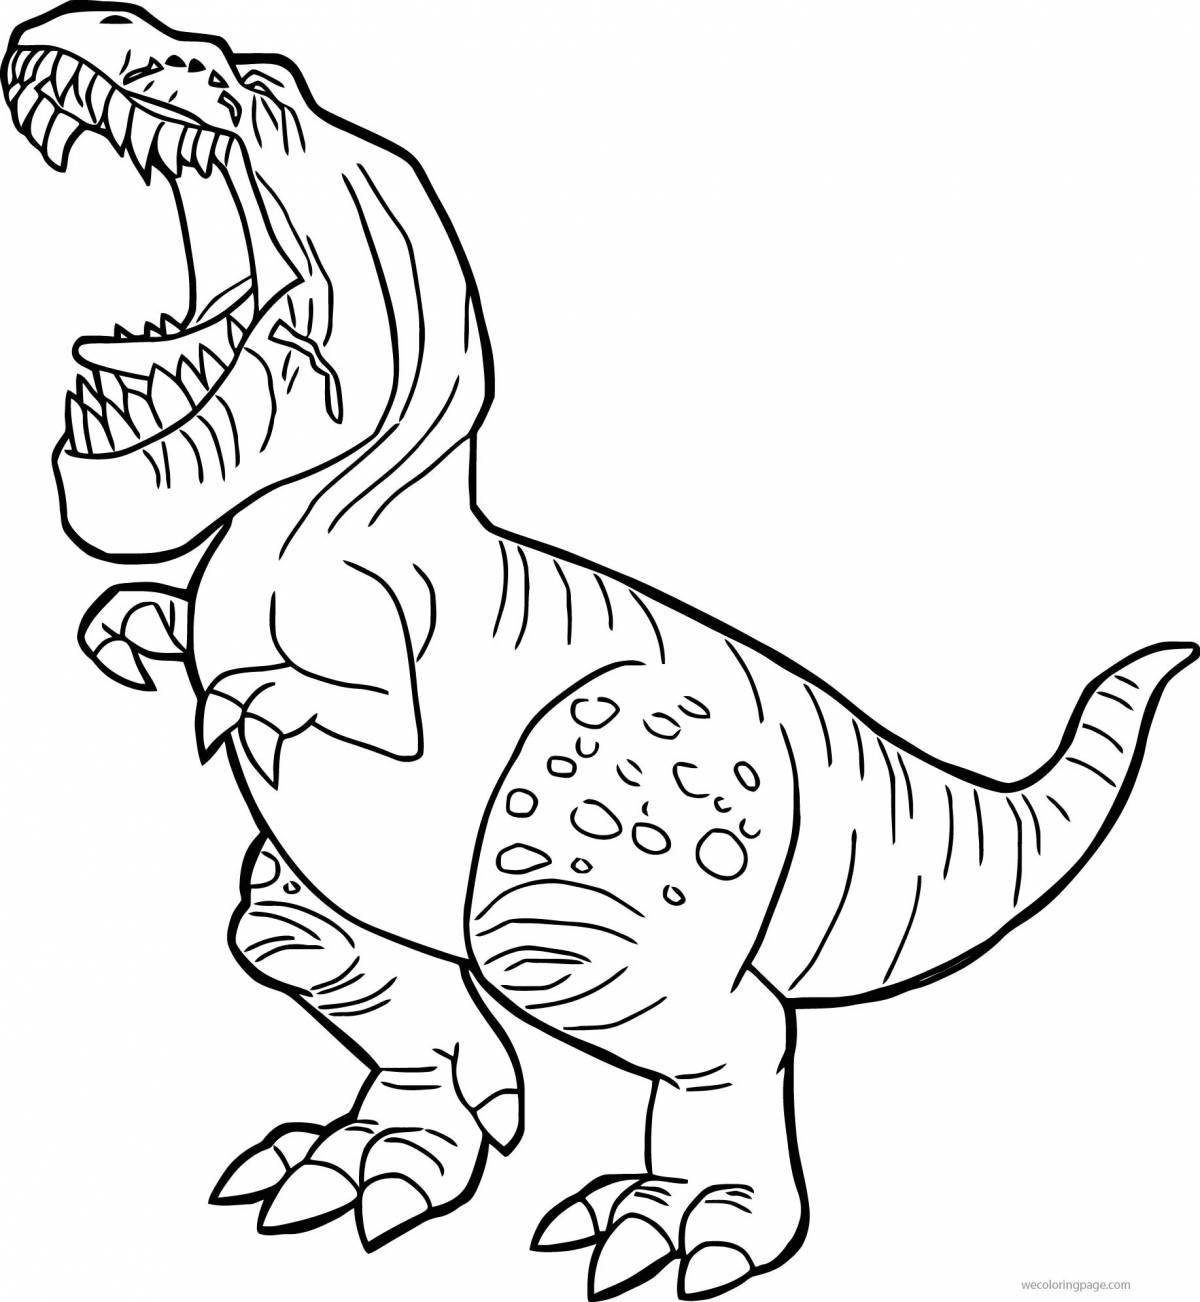 Impressive tyrannosaurus seal coloring page